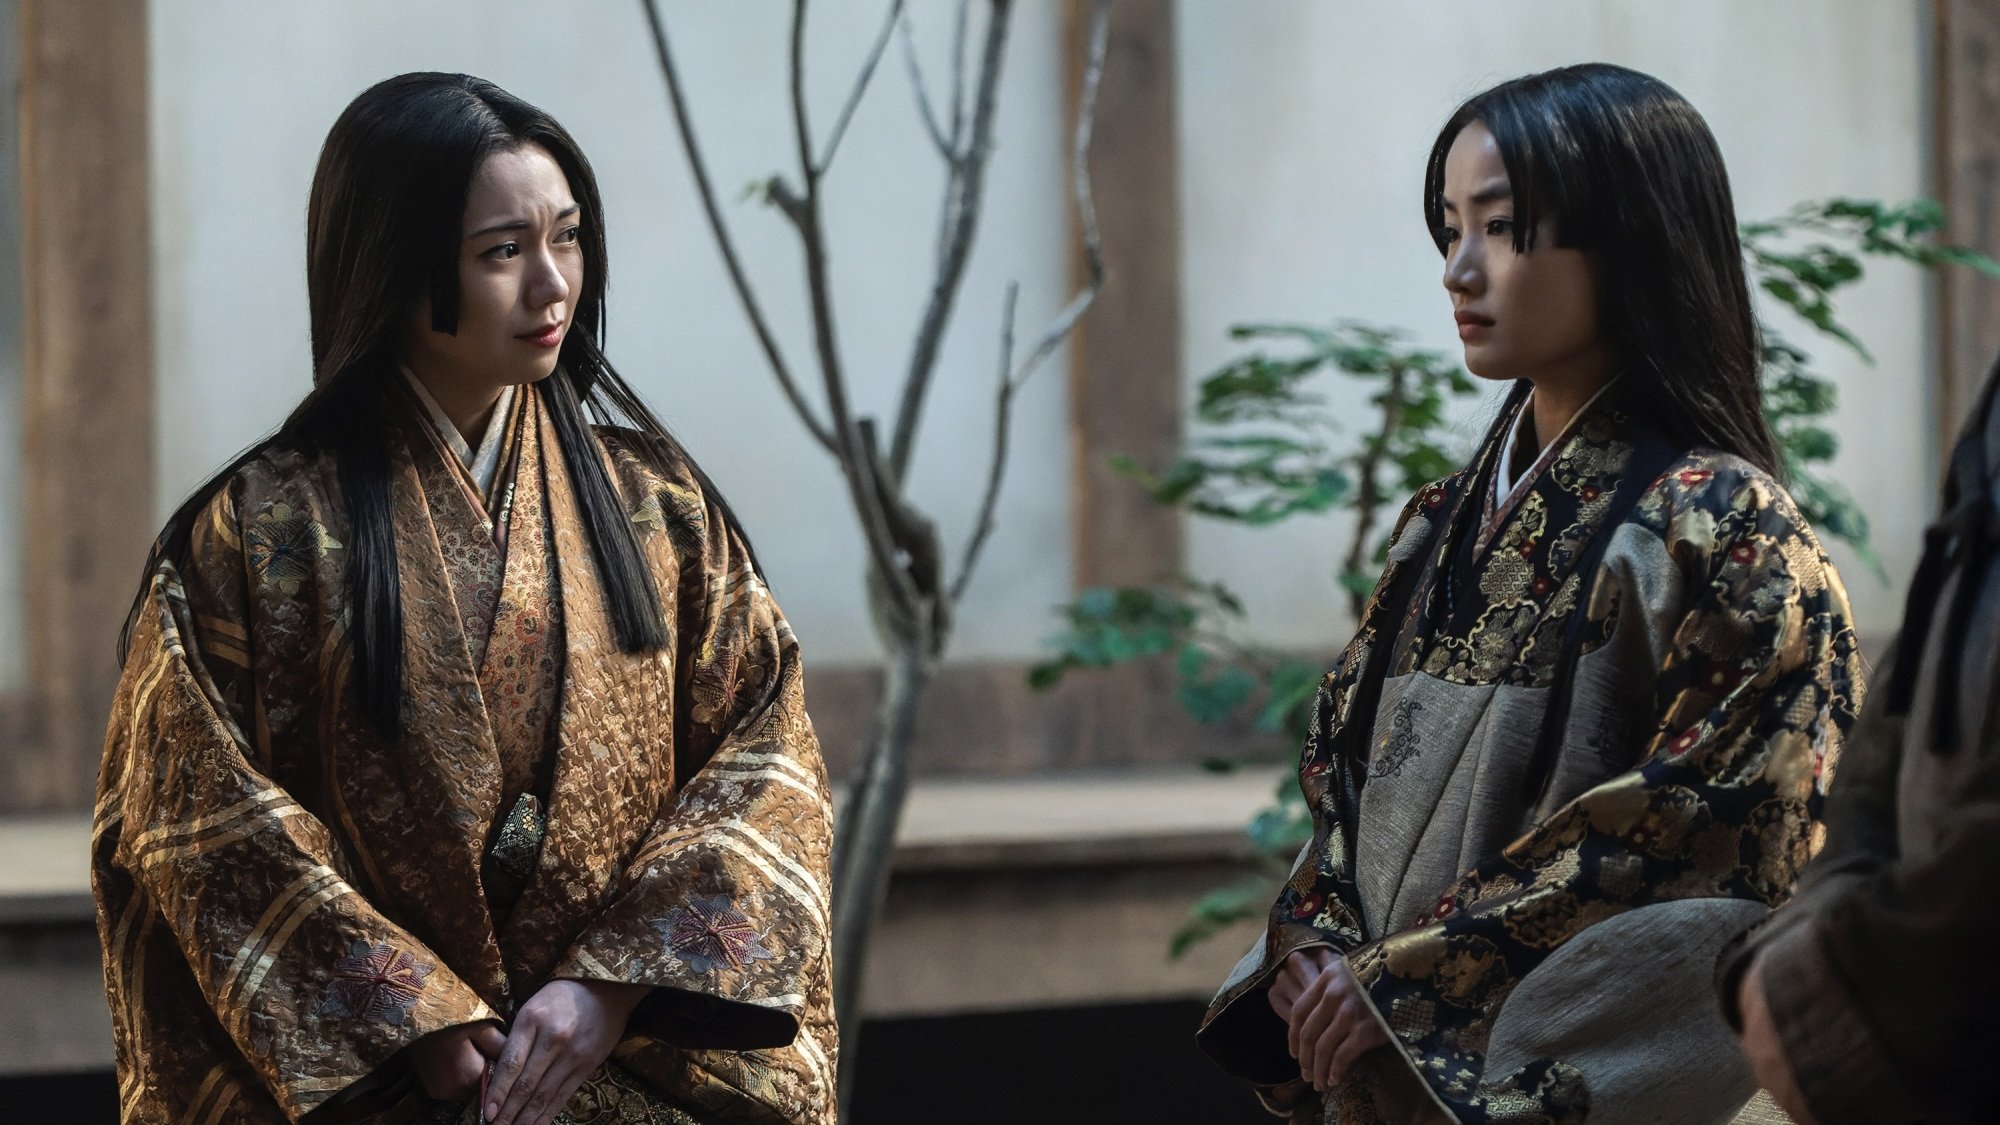 Lady Ochiba and Mariko from "Shōgun" have a conversation in a garden.